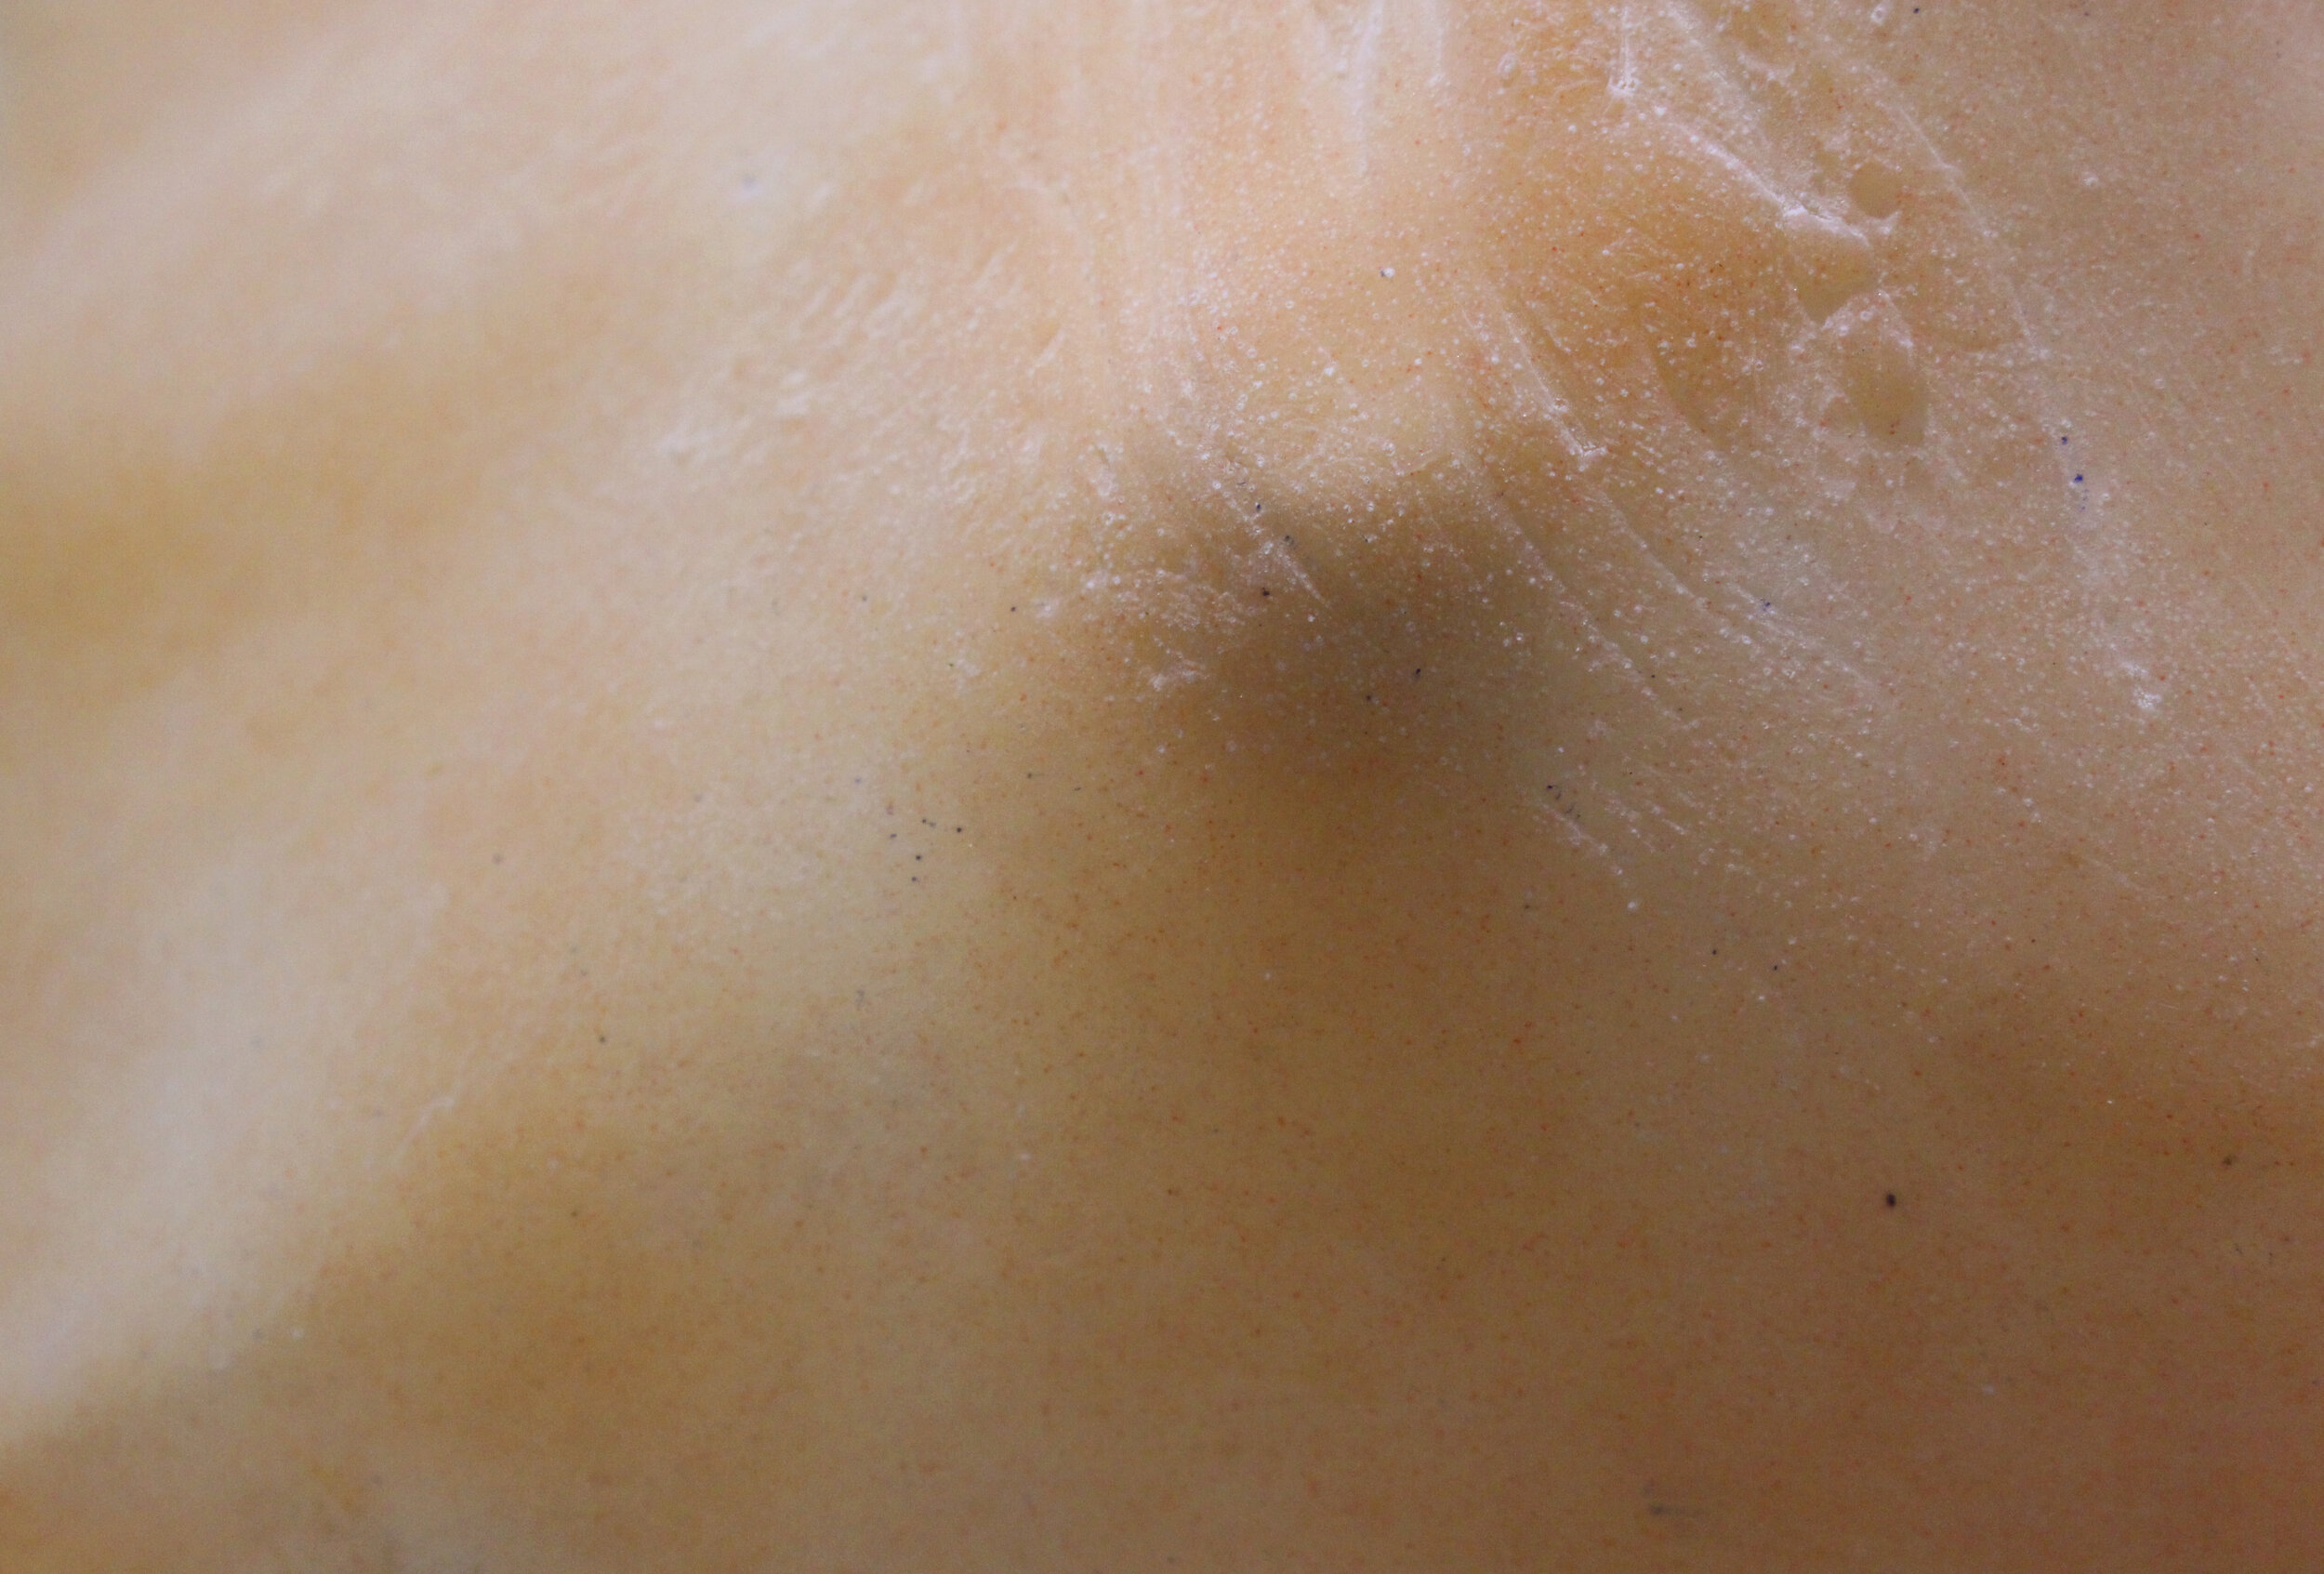 Stretched Skin Detail.jpg